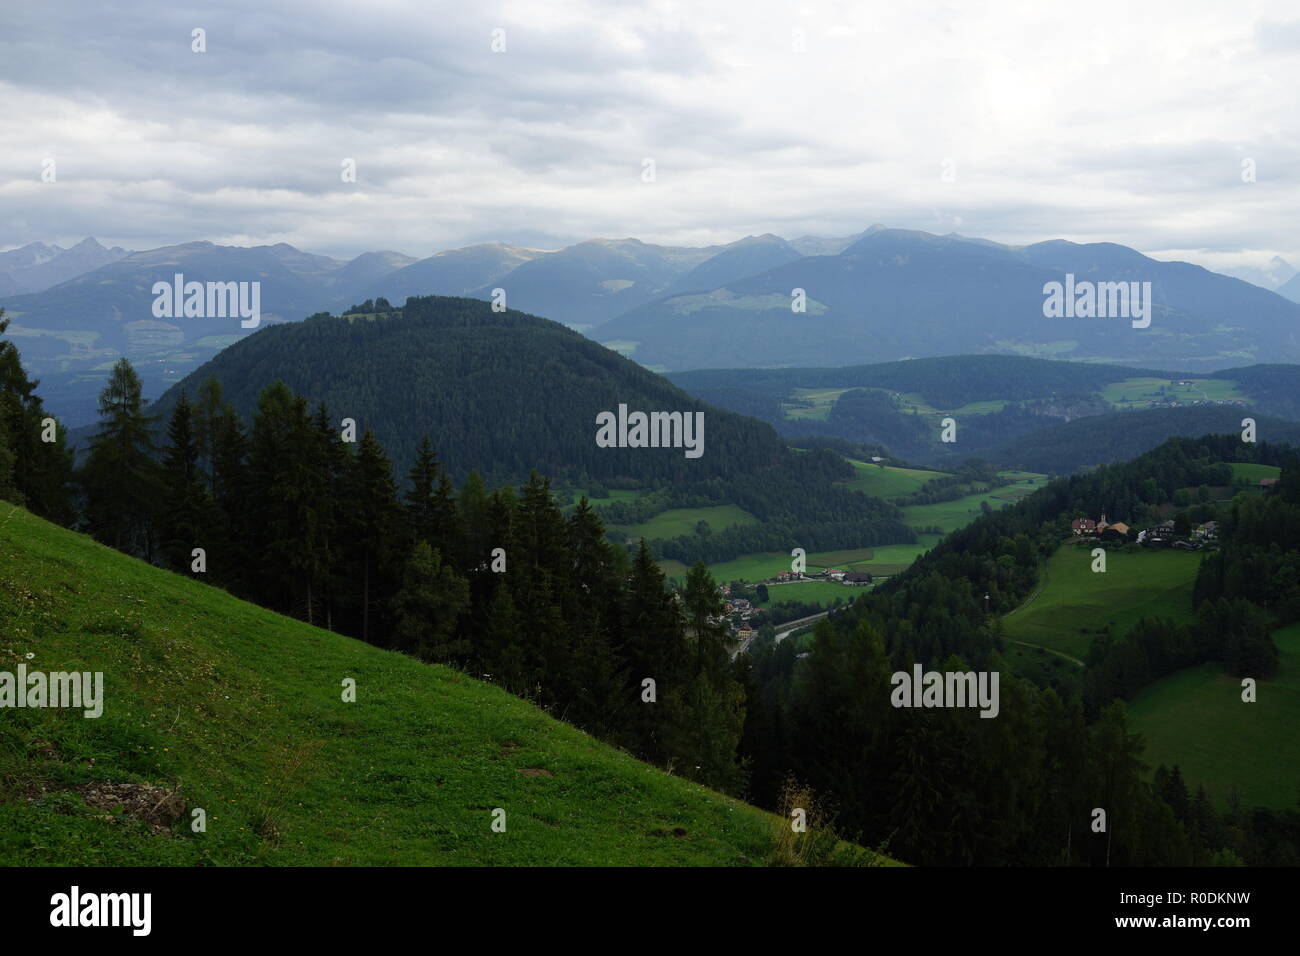 Alpine mountain landscape with coniferous forest Stock Photo